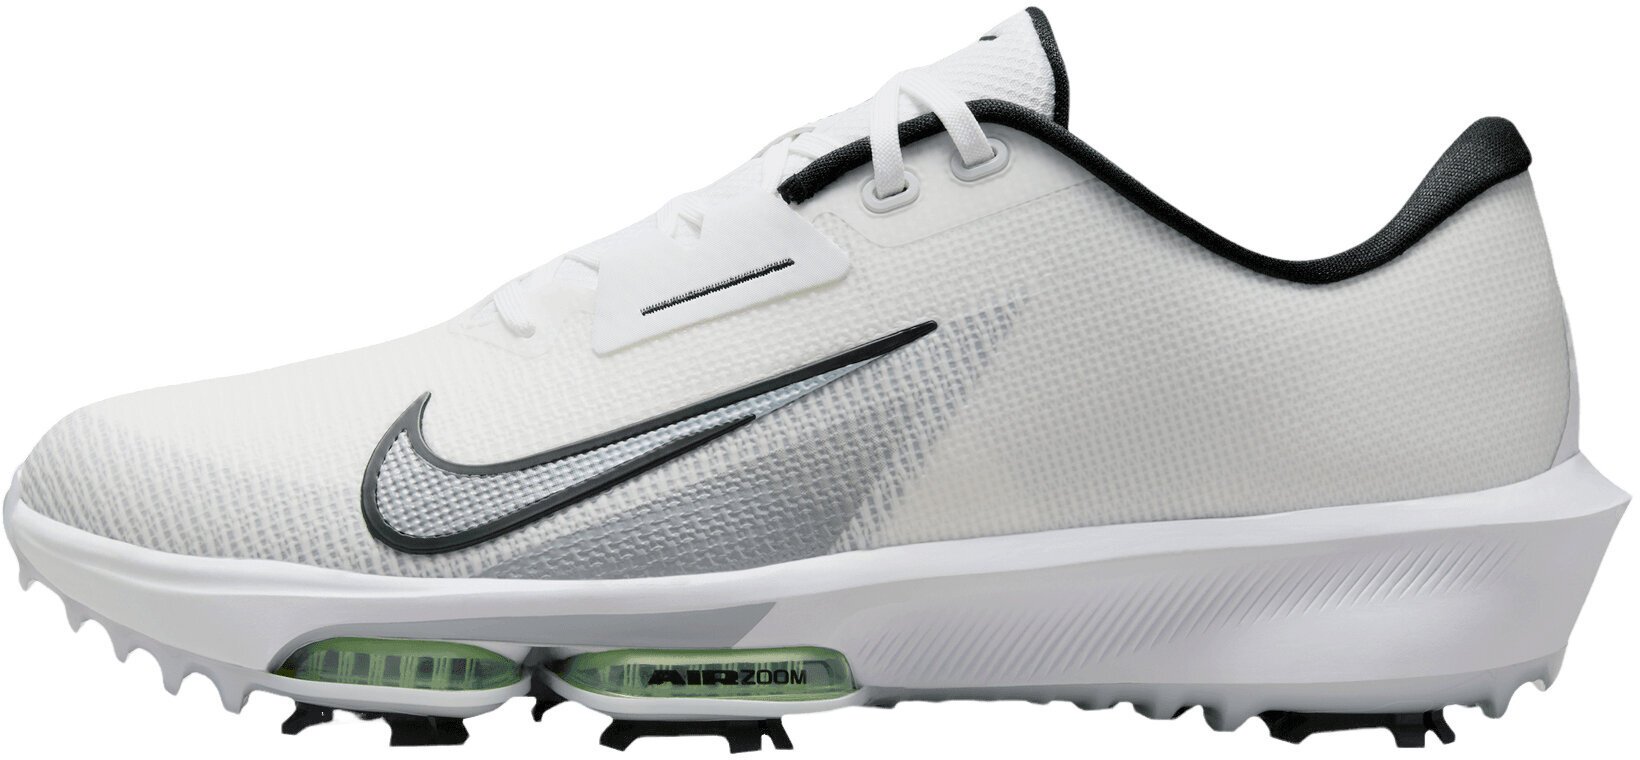 Nike Air Zoom Infinity Tour Next 2 Unisex Golf Shoes White/Black/Vapor Green/Pure Platinum 44 White unisex